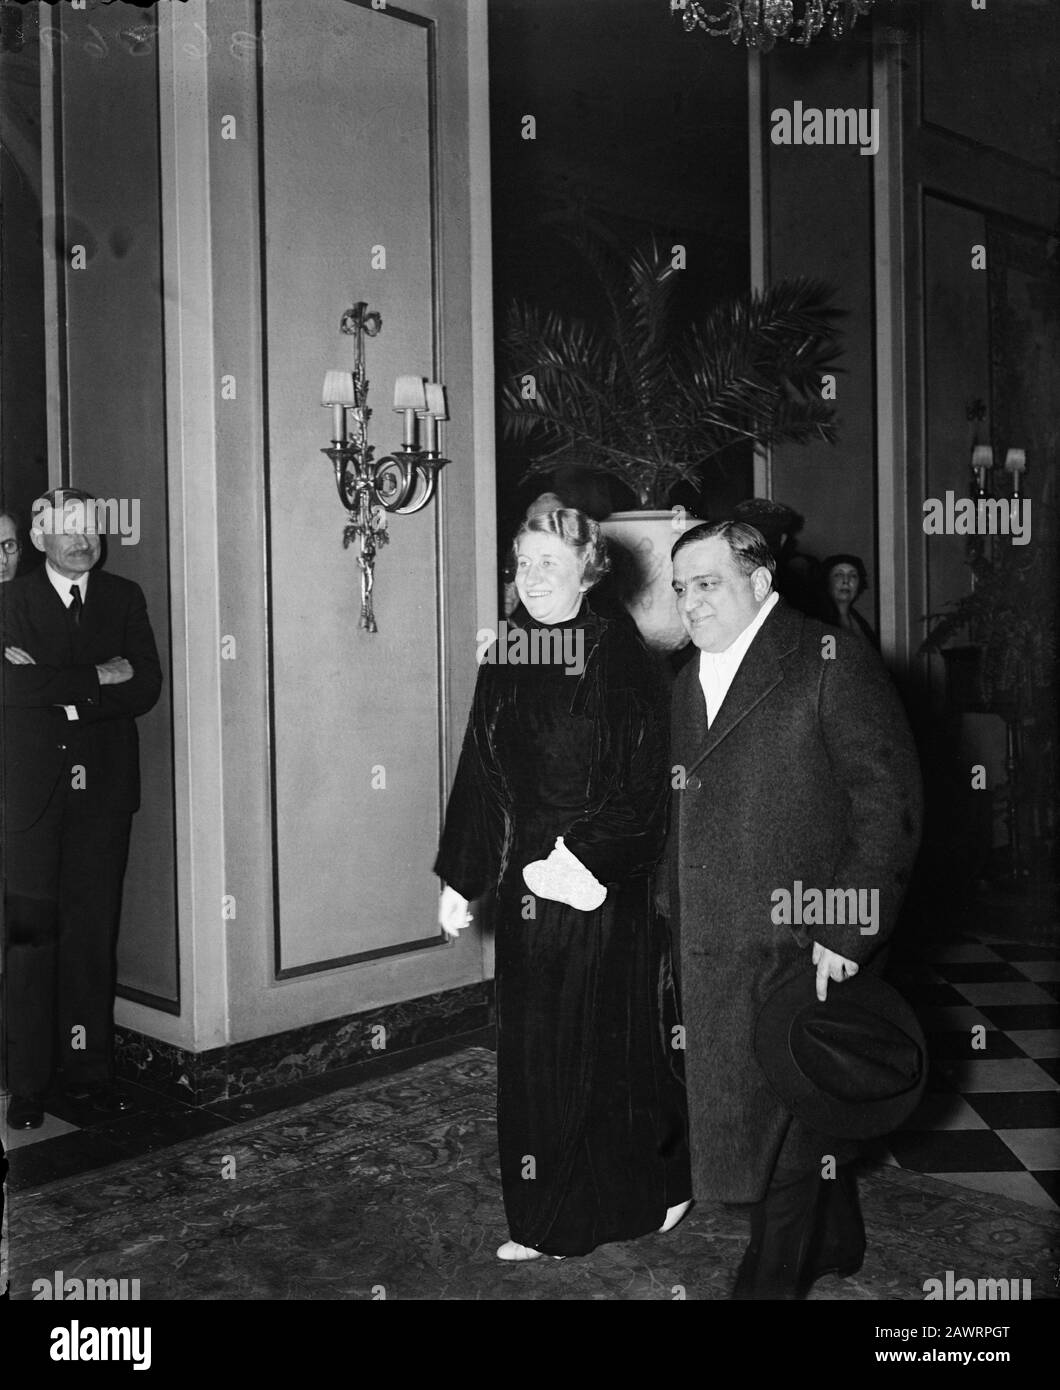 January 2, 1940 - With Mayor Fiorello La Guardia on hand, Lou